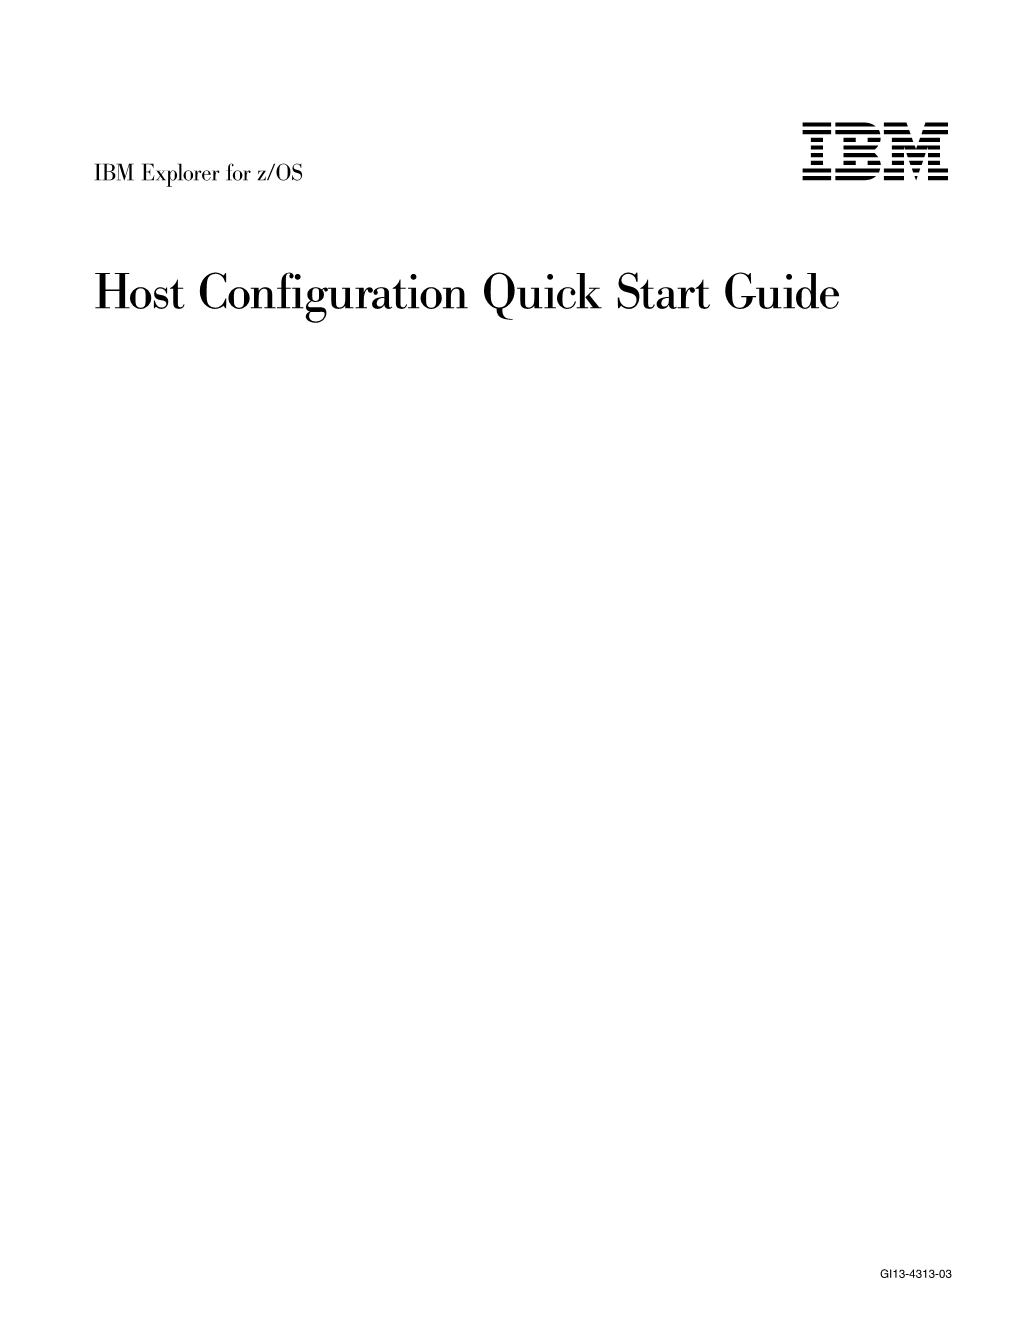 IBM Explorer for Z/OS: Host Configuration Quick Start Guide Figures